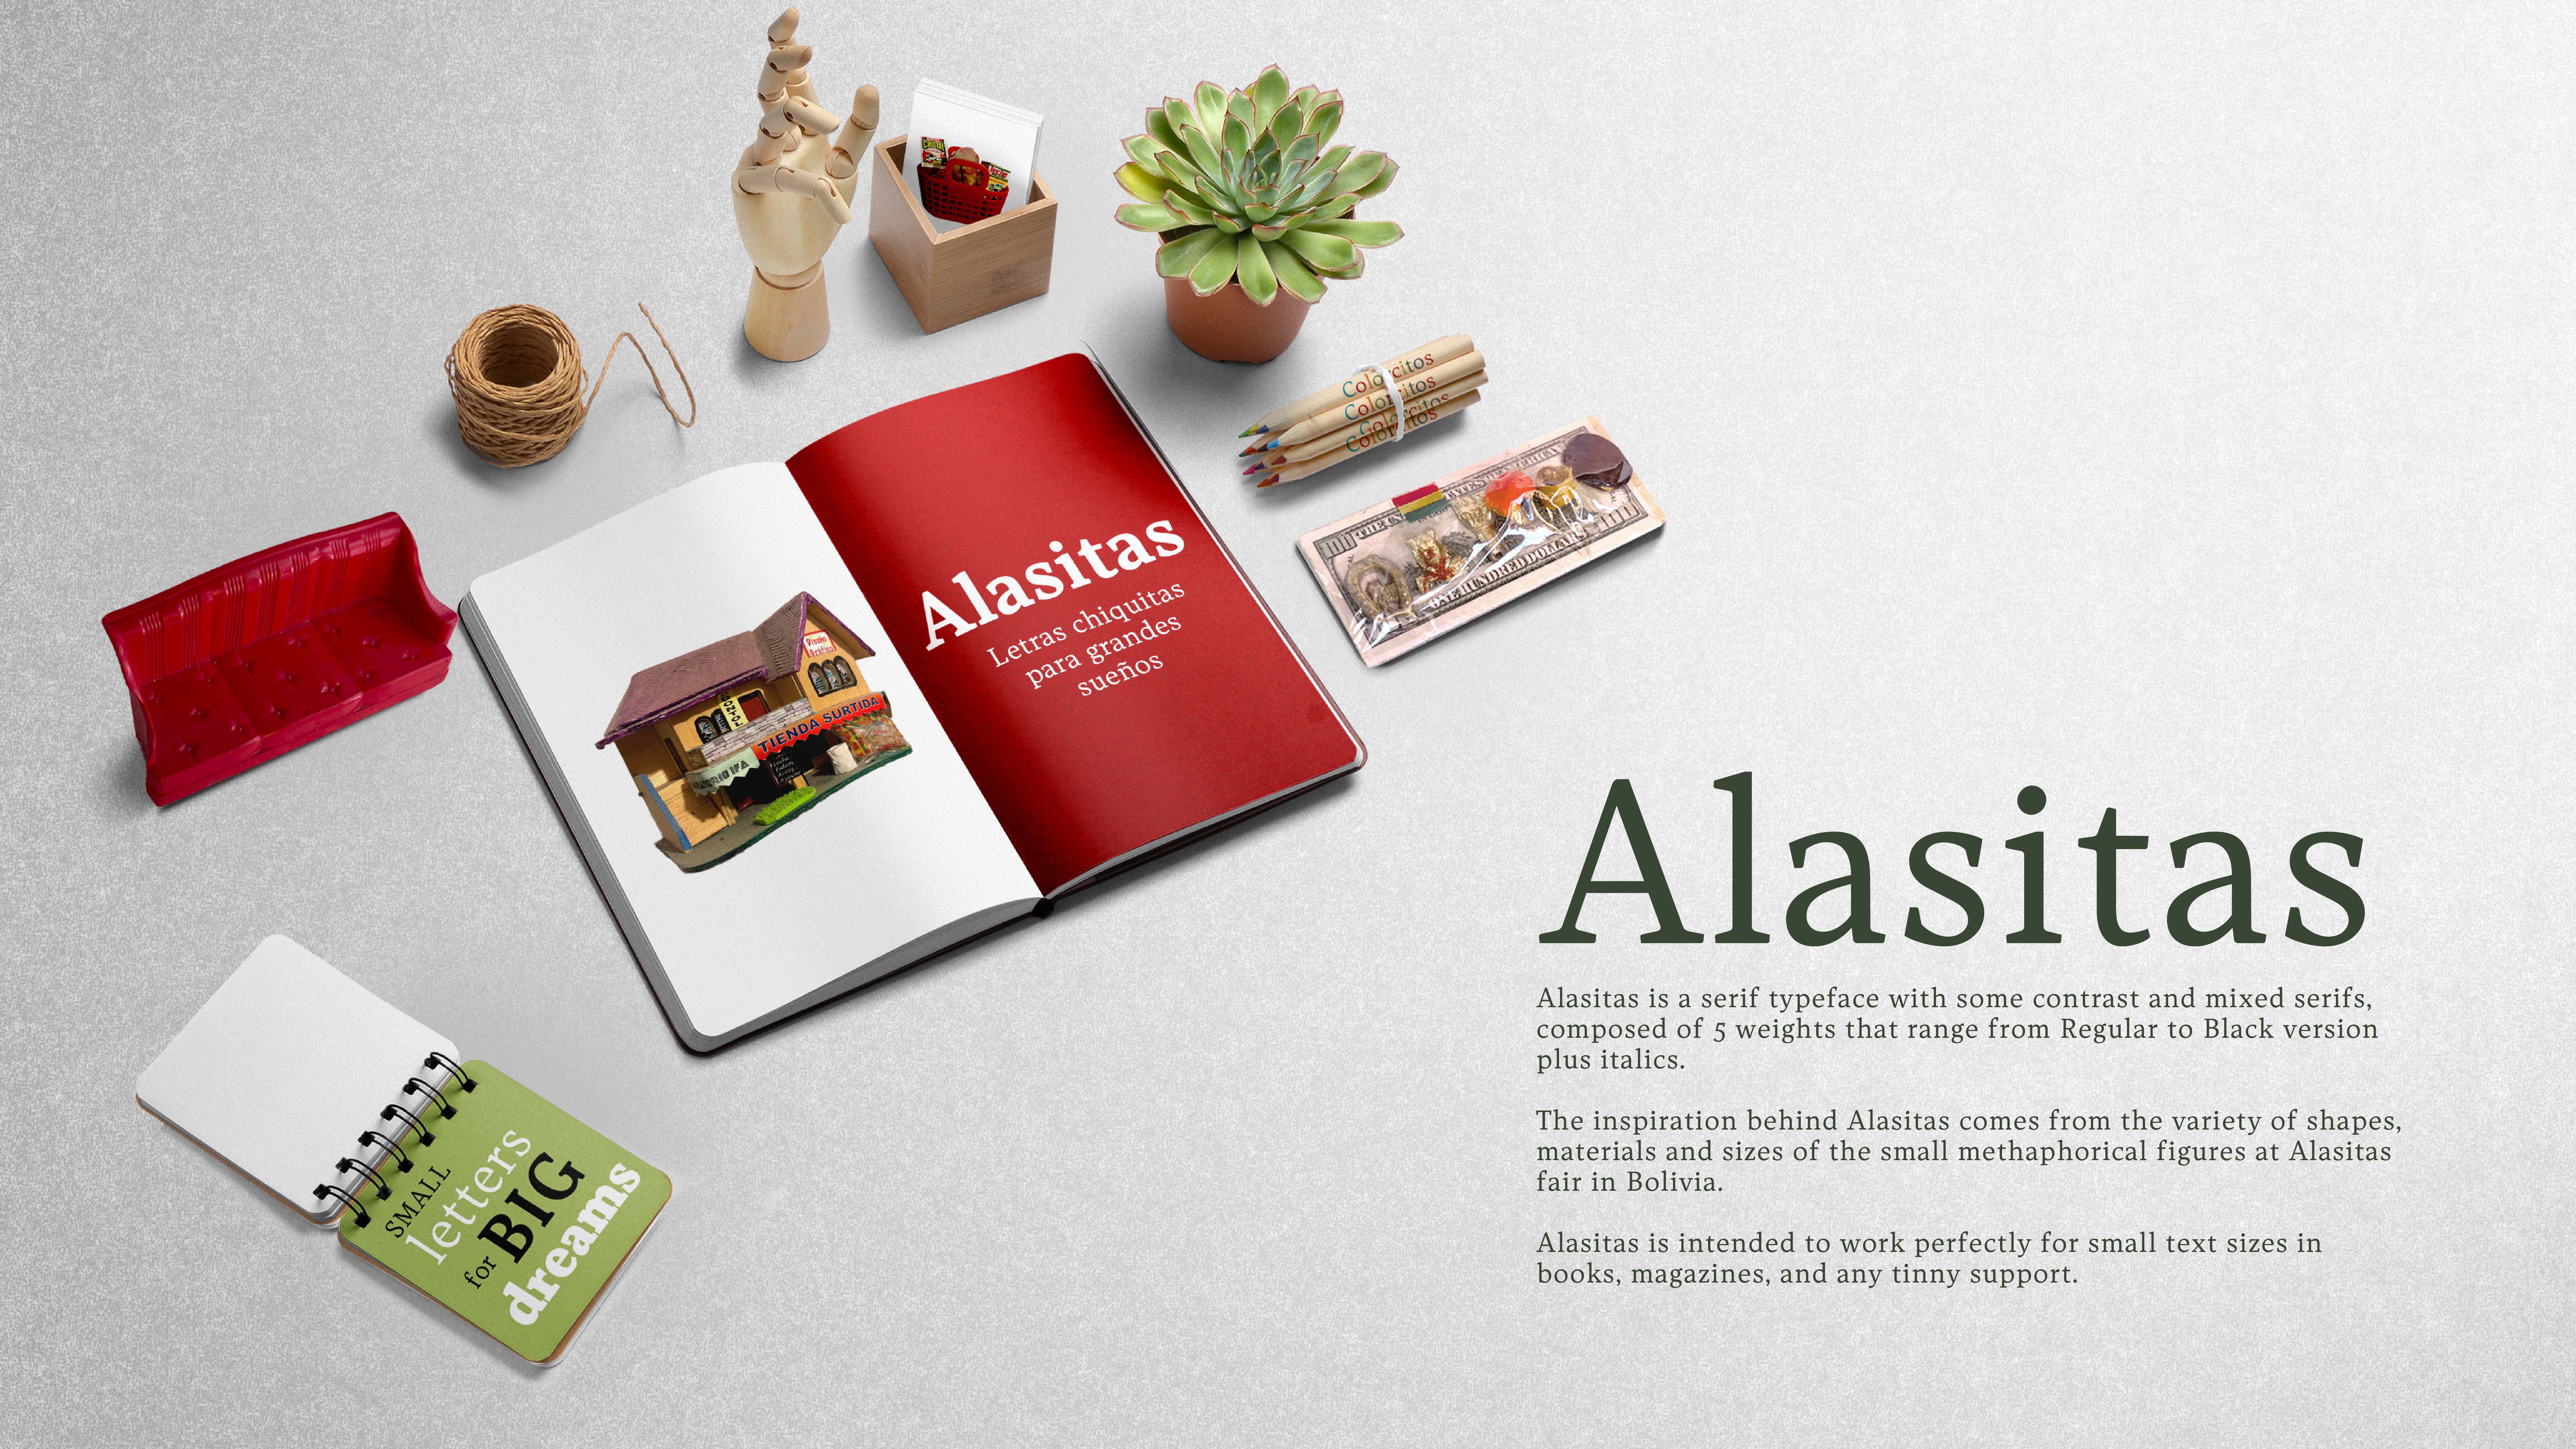 Cover and description of Alasitas